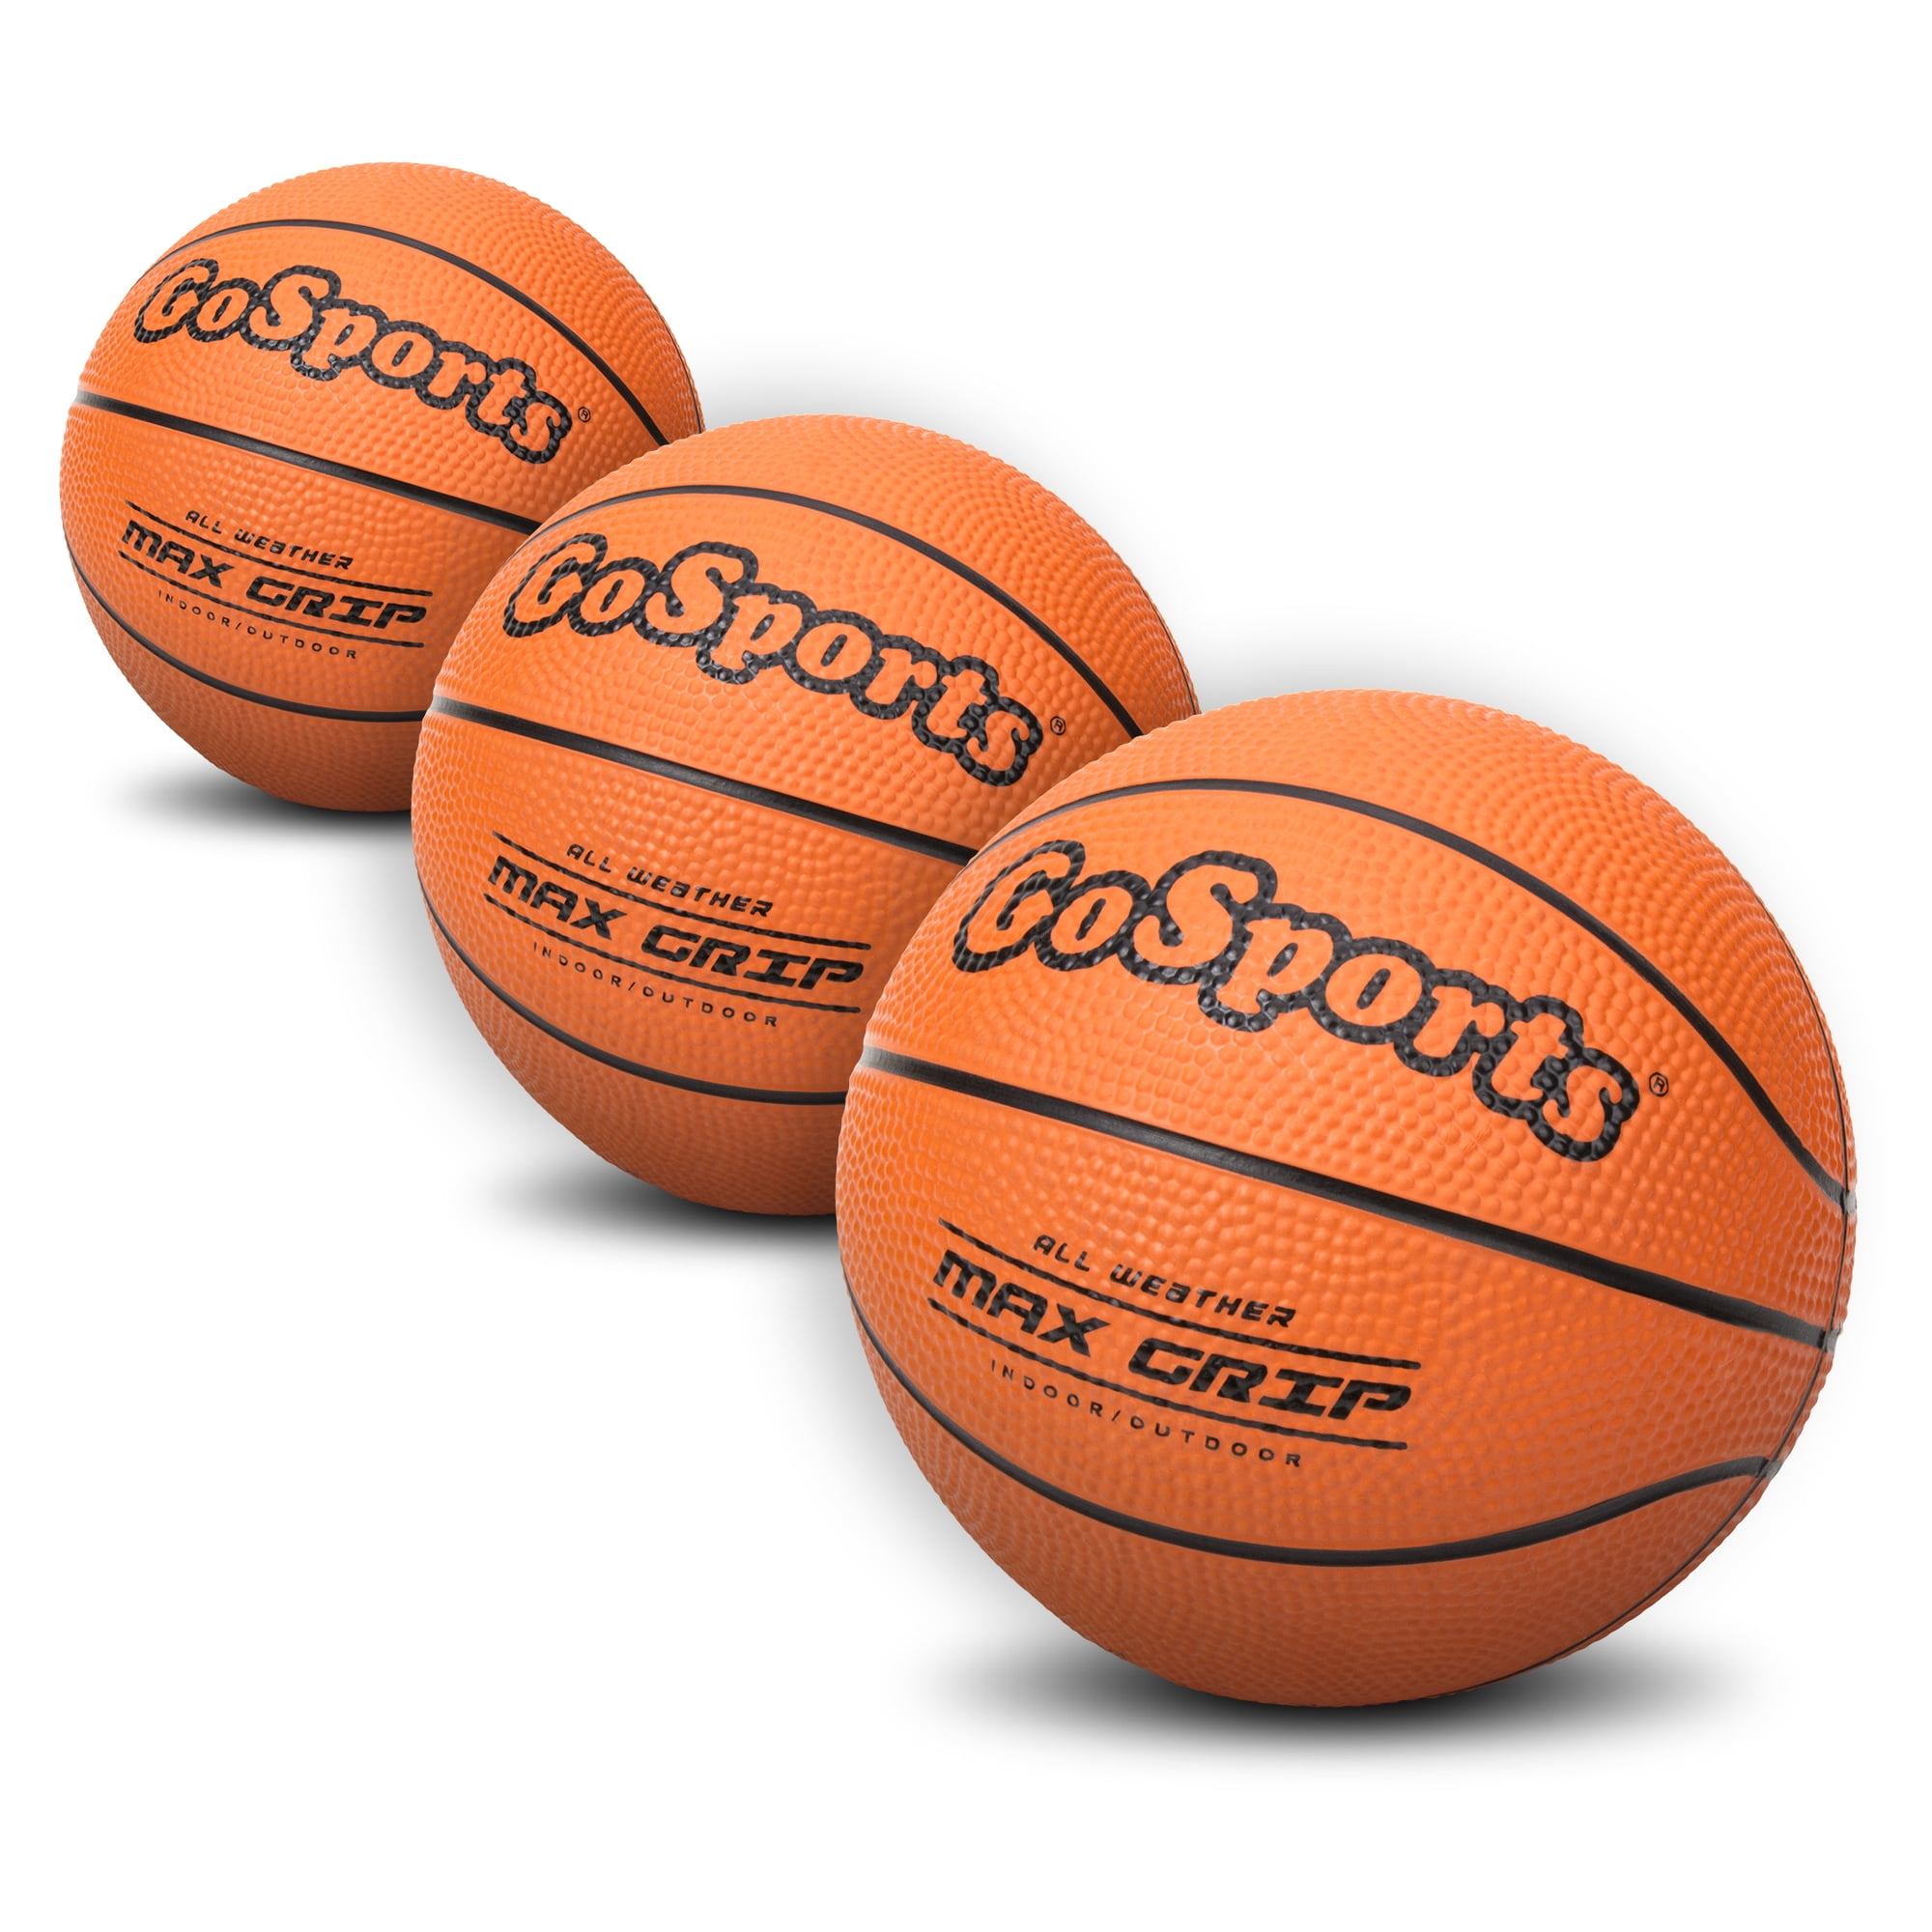 6 Mini Basketballs, 2.5, 1 each - Kroger